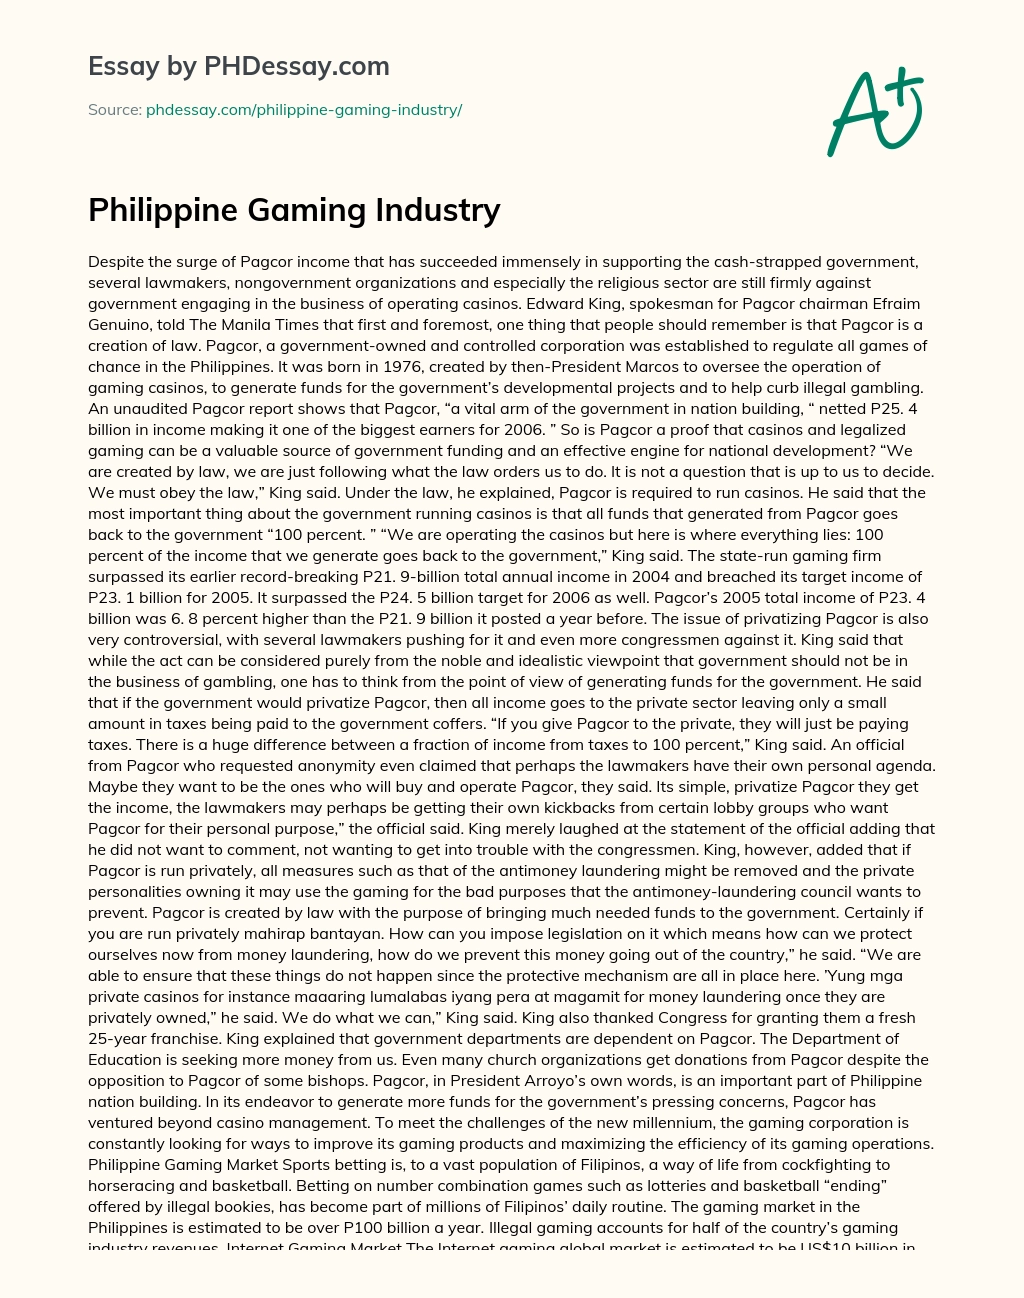 Philippine Gaming Industry essay